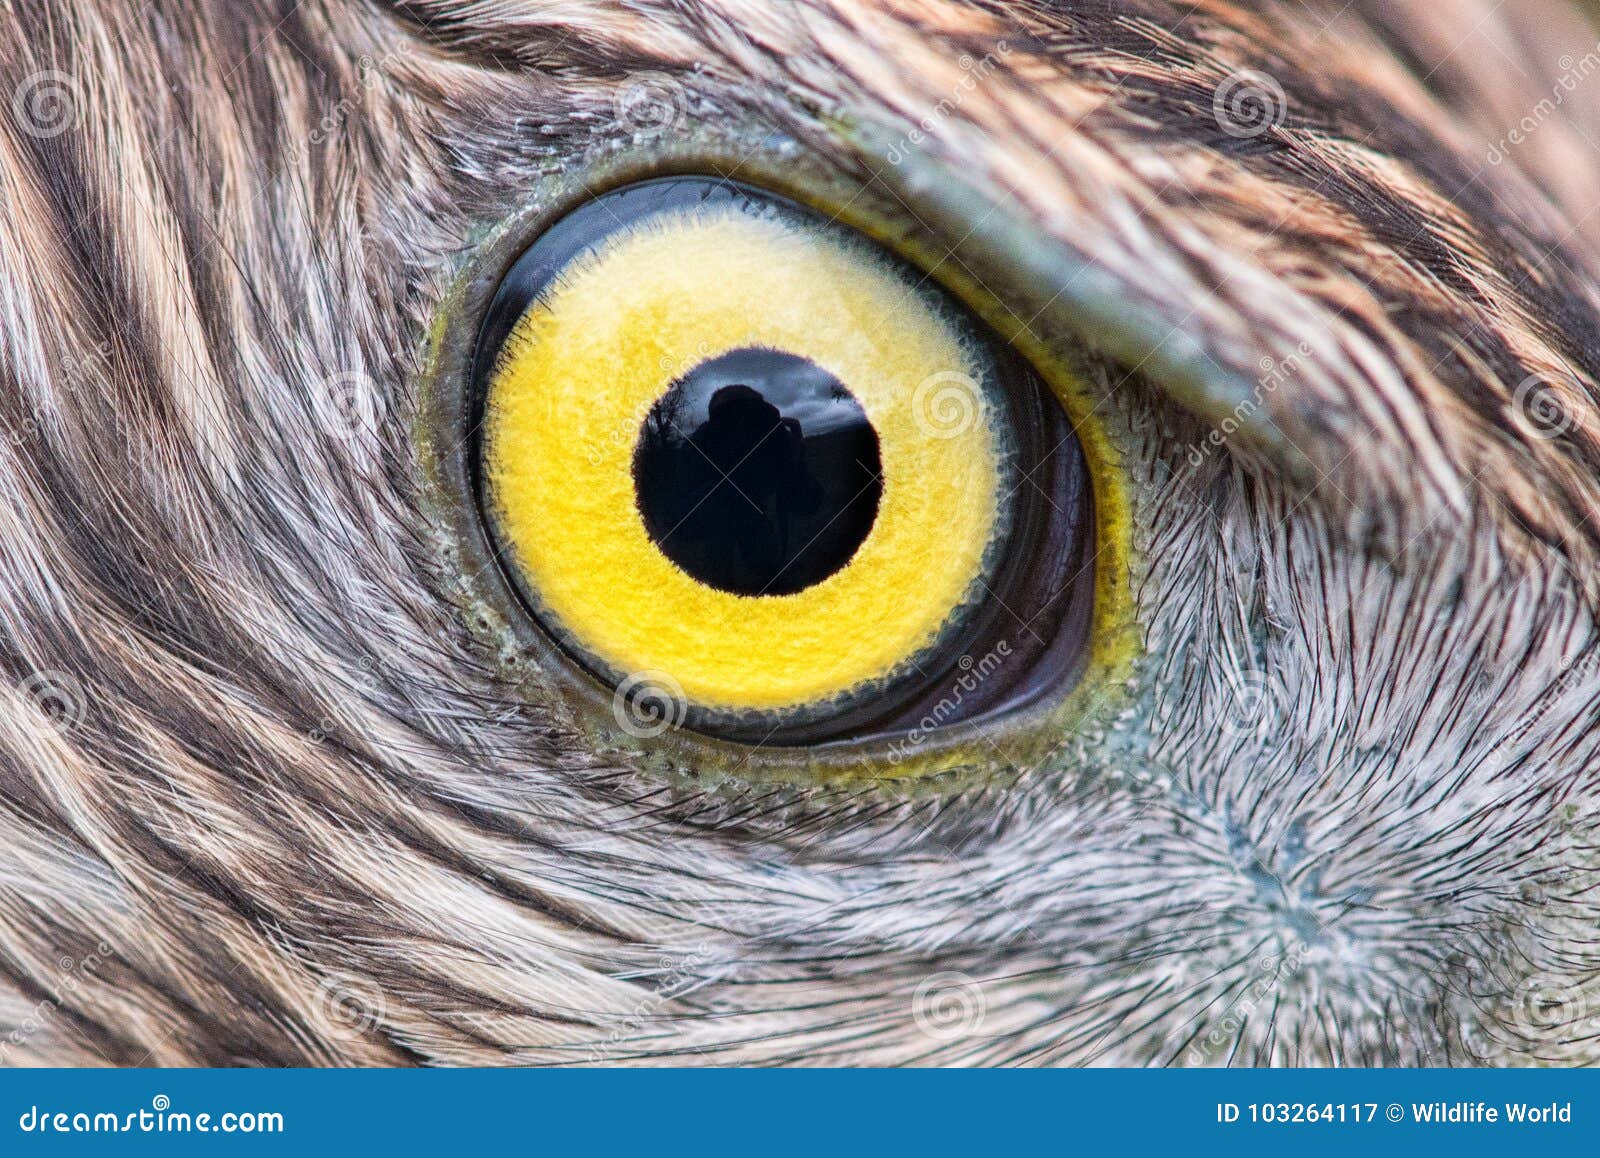 https://thumbs.dreamstime.com/z/eagle-eye-close-up-eye-goshawk-eagle-eye-close-up-macro-photo-eye-goshawk-103264117.jpg